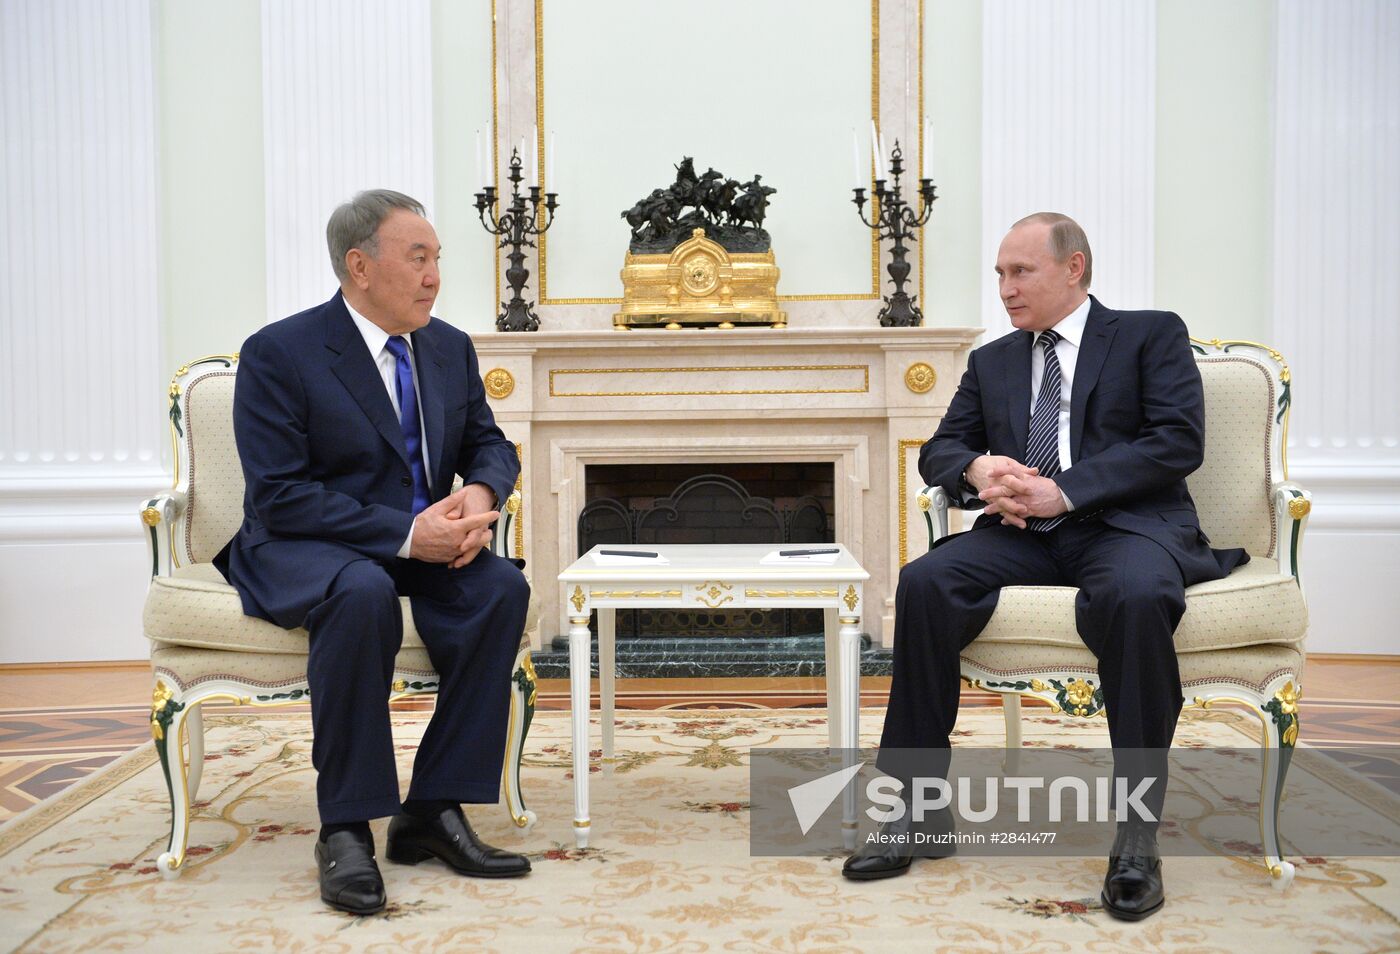 Russian President Vladimir Putin meets with Kazakh President Nursultan Nazarbayev